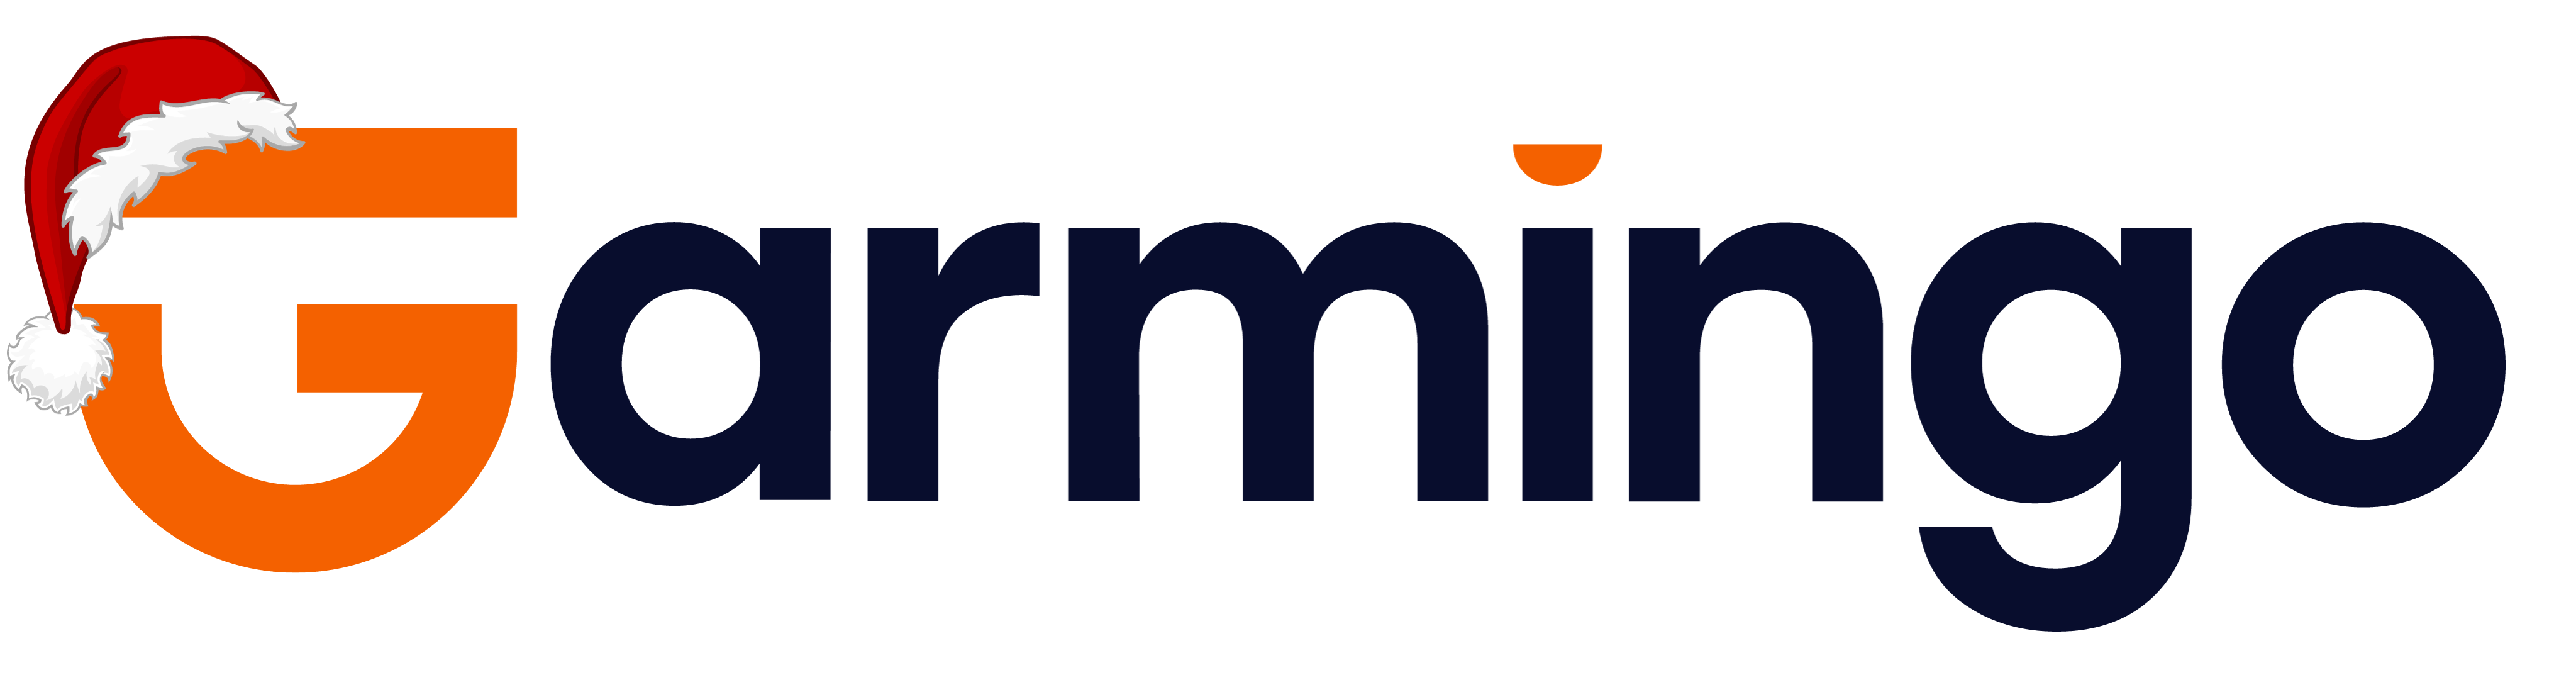 Garmingo | Framework Library [100% OFF]